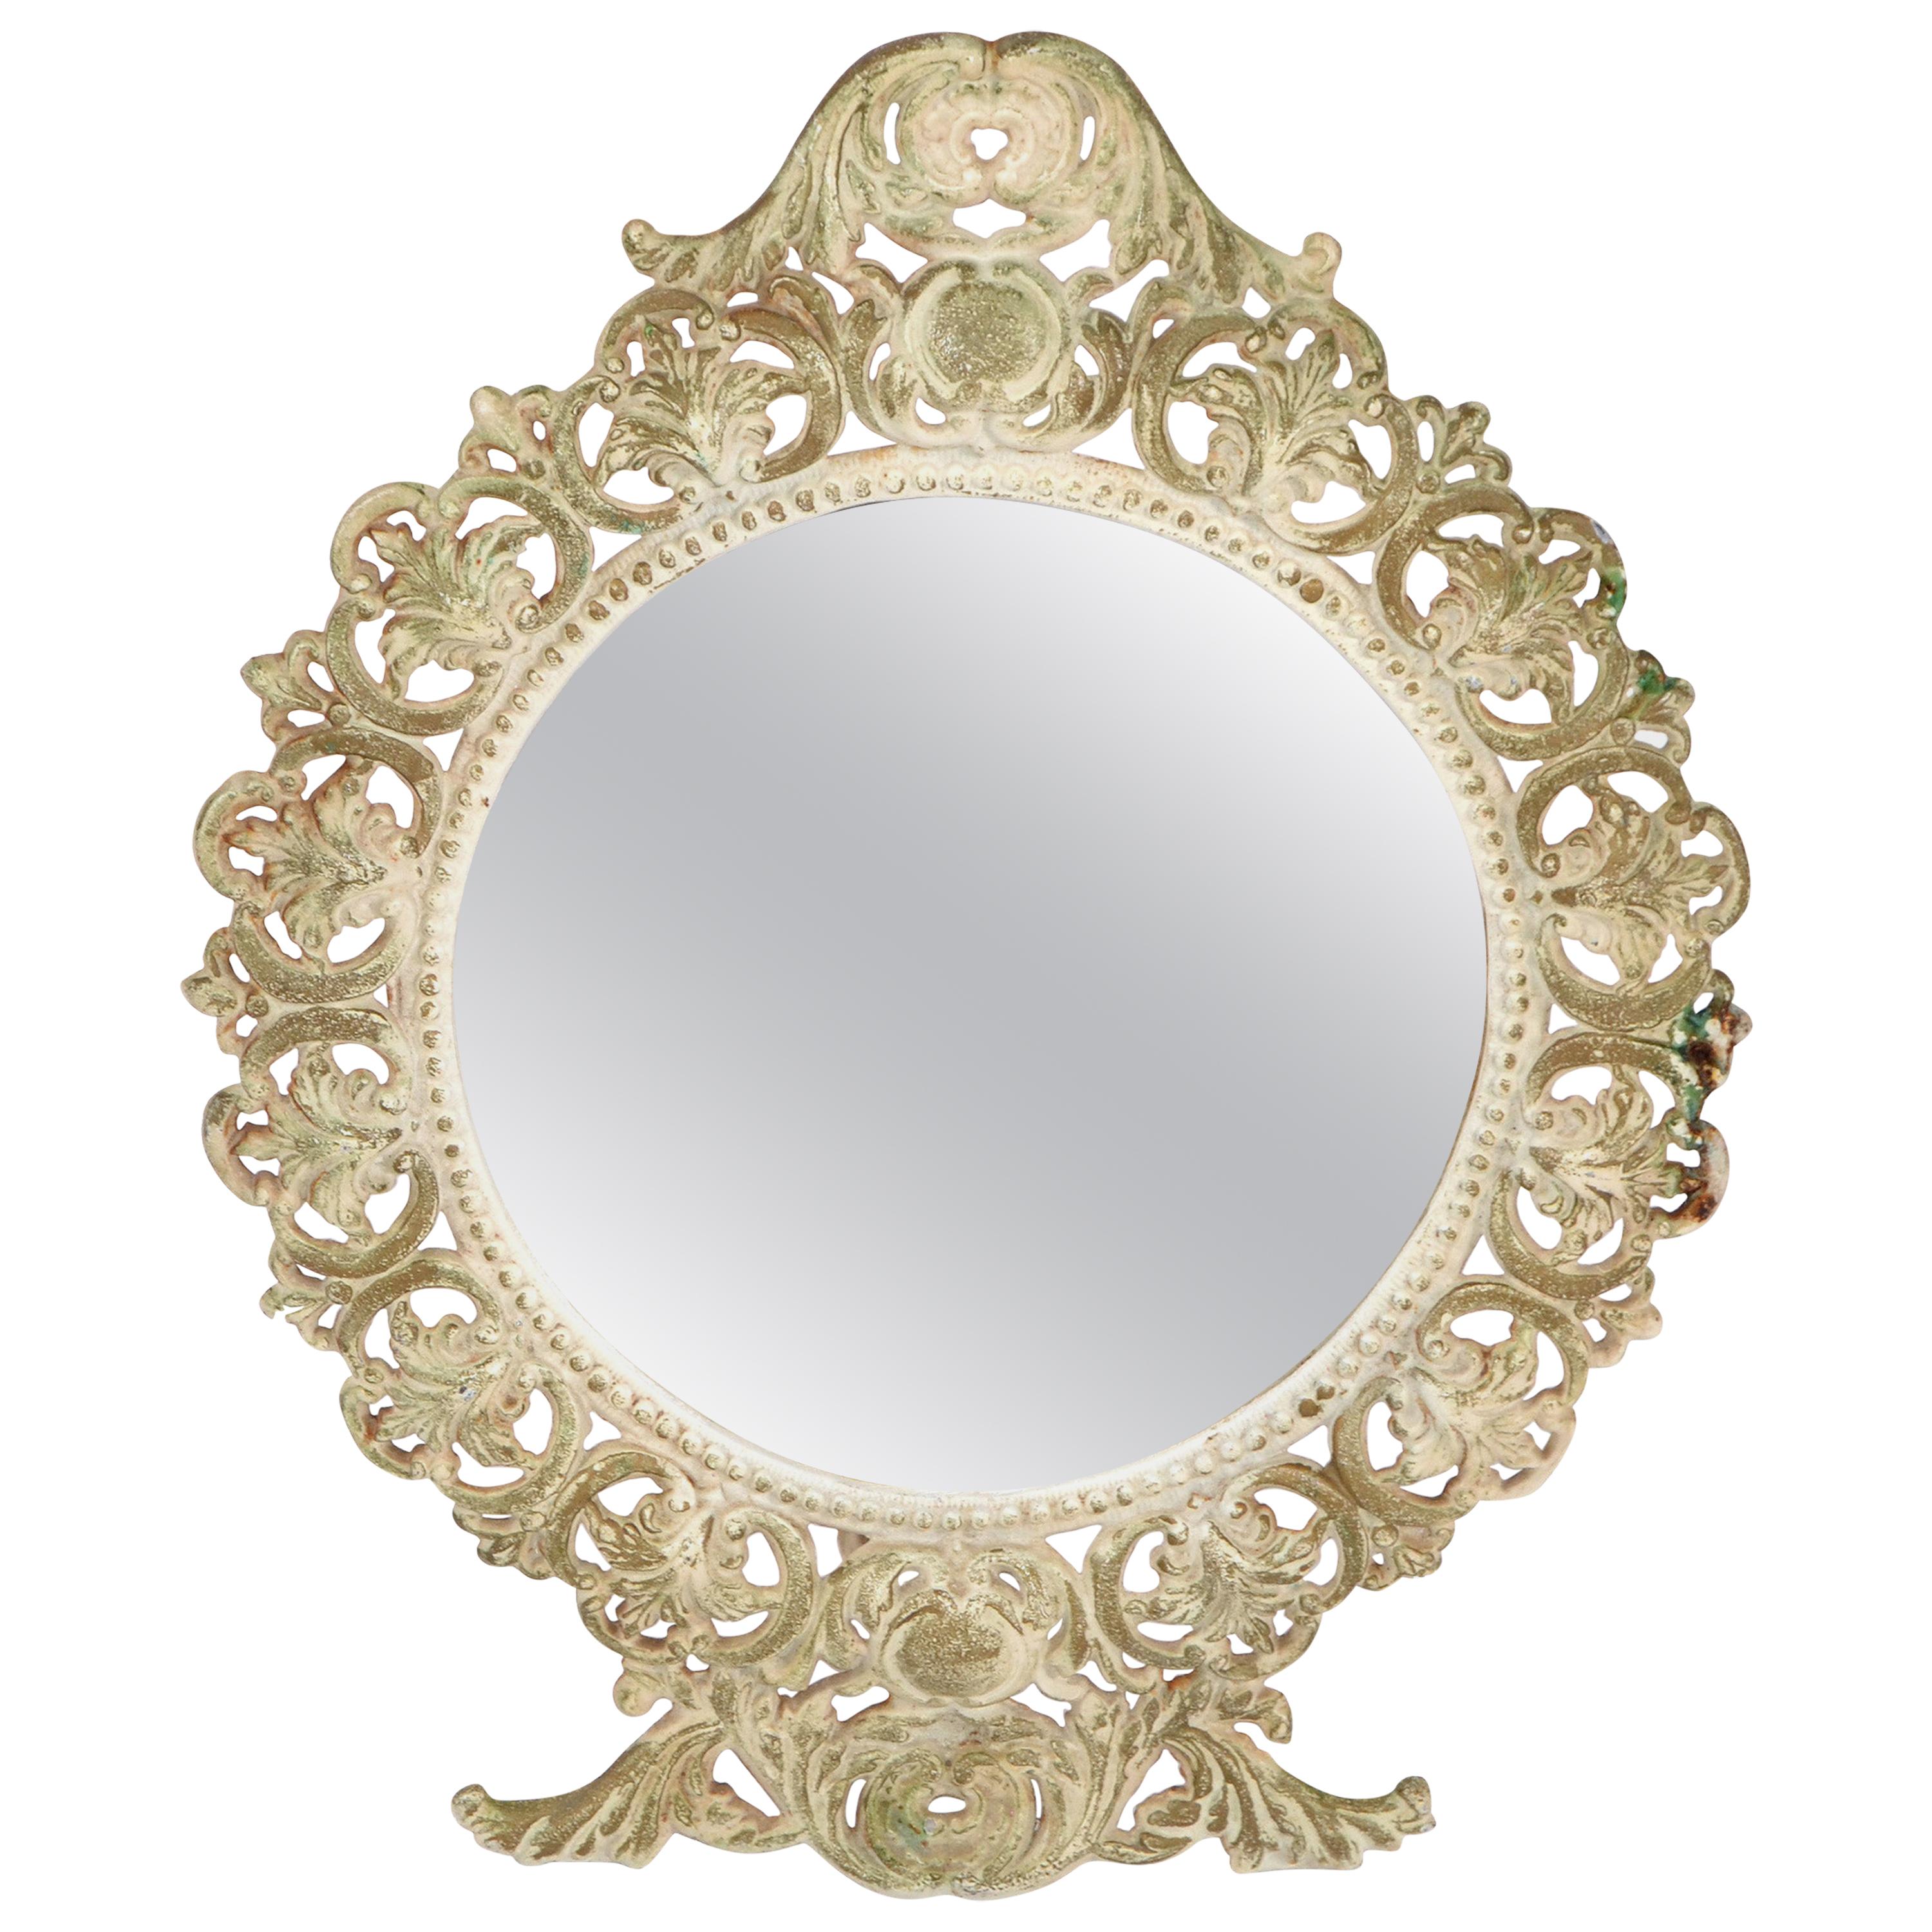 50s Art Nouveau Cast Iron Table Vanity Mirror Desk Accessories Distressed Finish For Sale